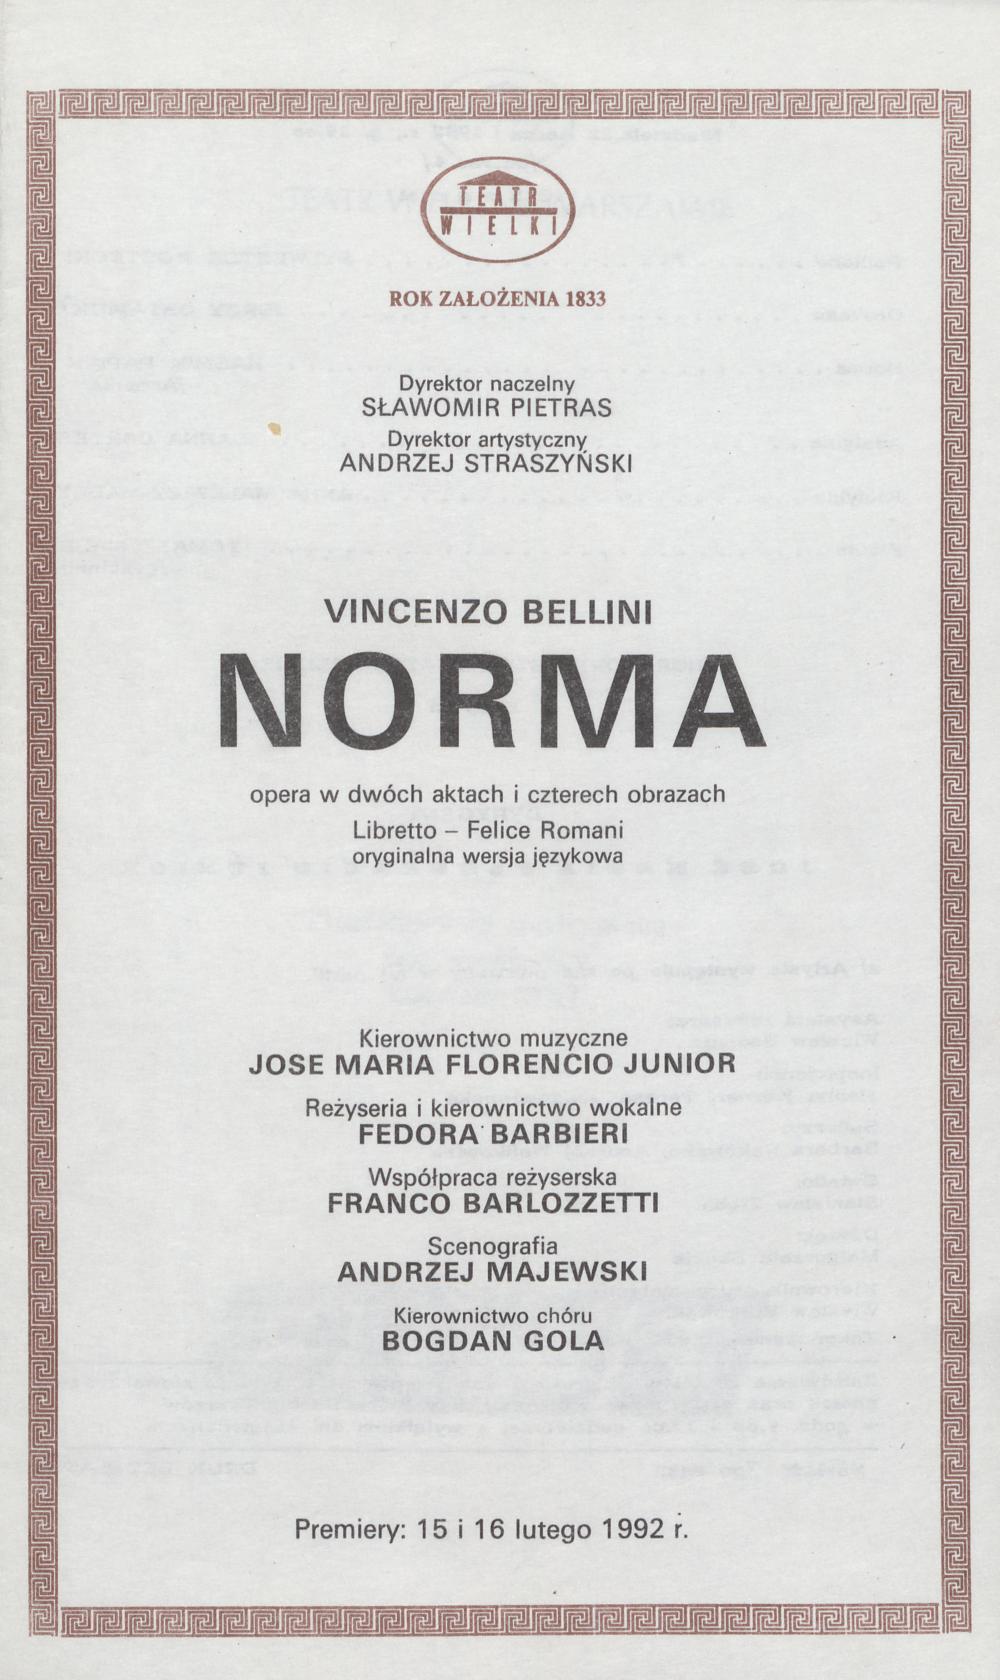 Wkładka obsadowa „Norma” Vincenzo Bellini. 22-03-1992